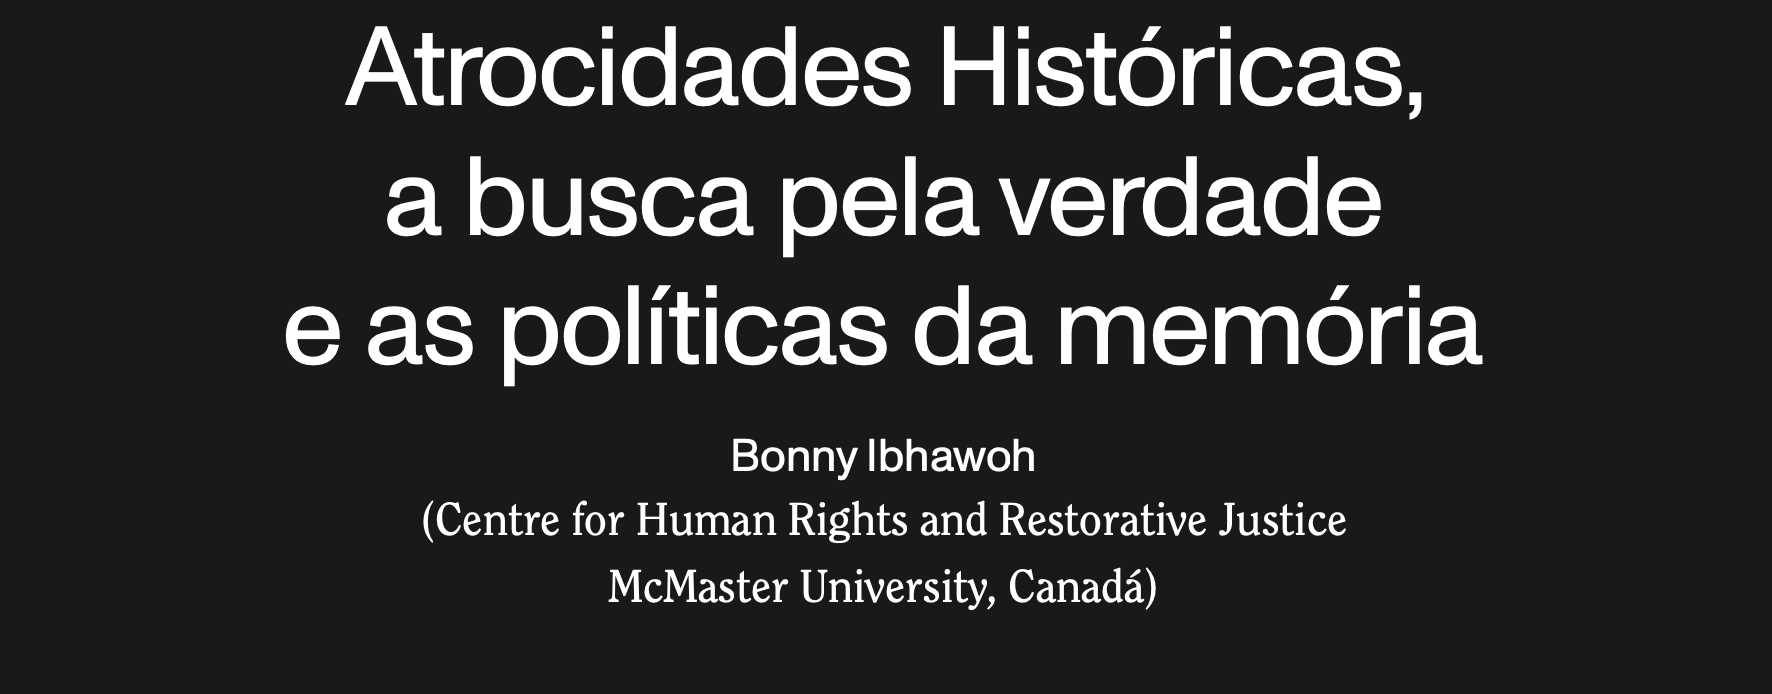 Conference by Bonny Ibhawoh (McMaster University, Canada)